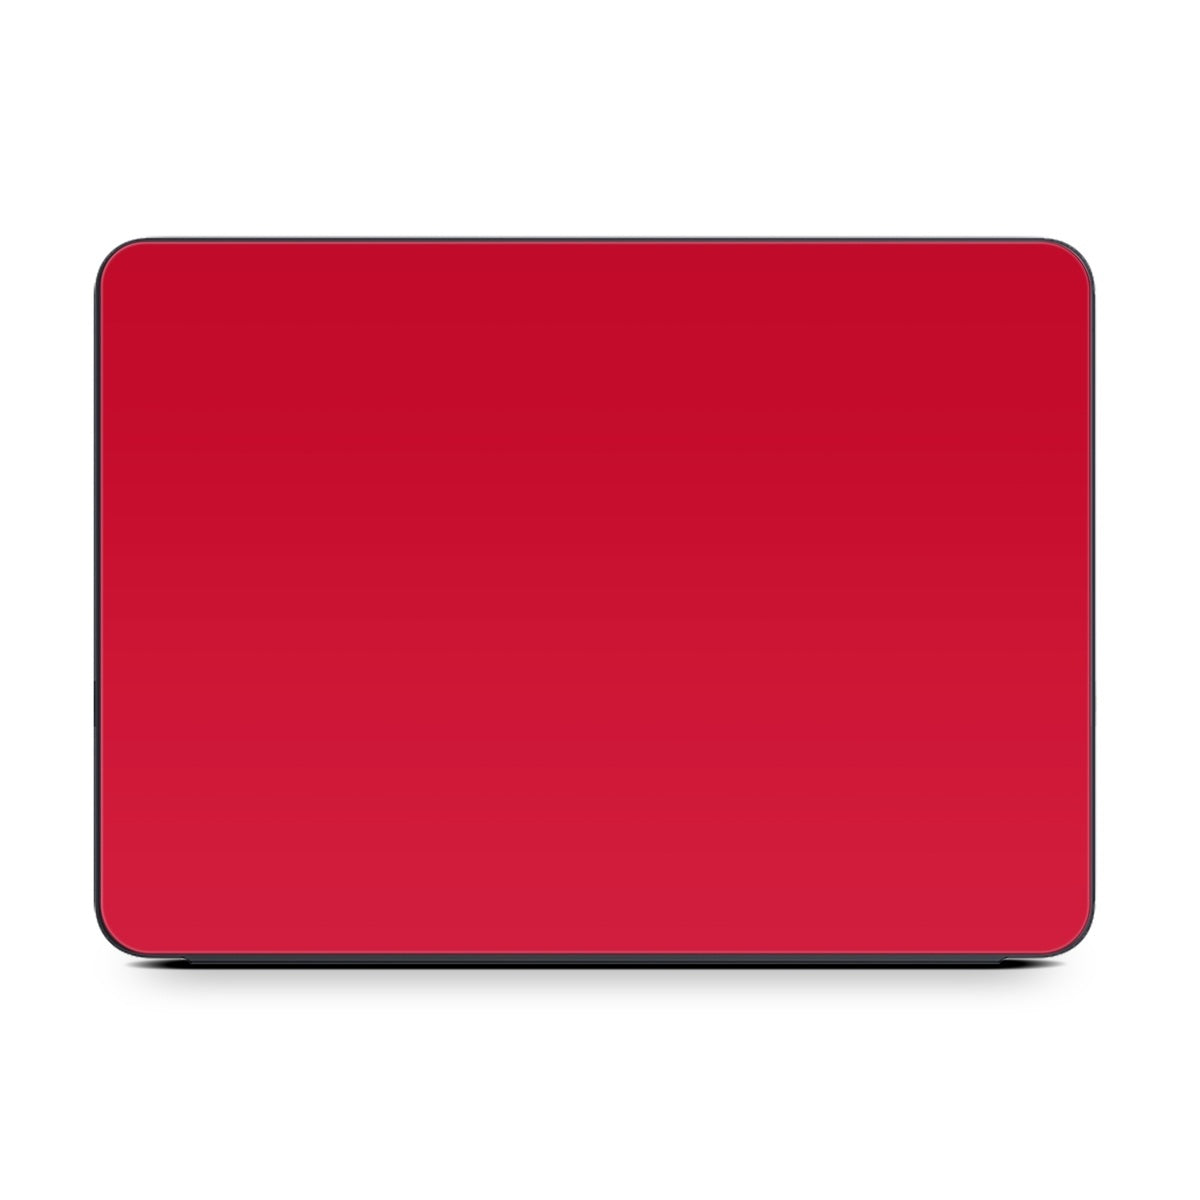 Solid State Red - Apple Smart Keyboard Folio Skin